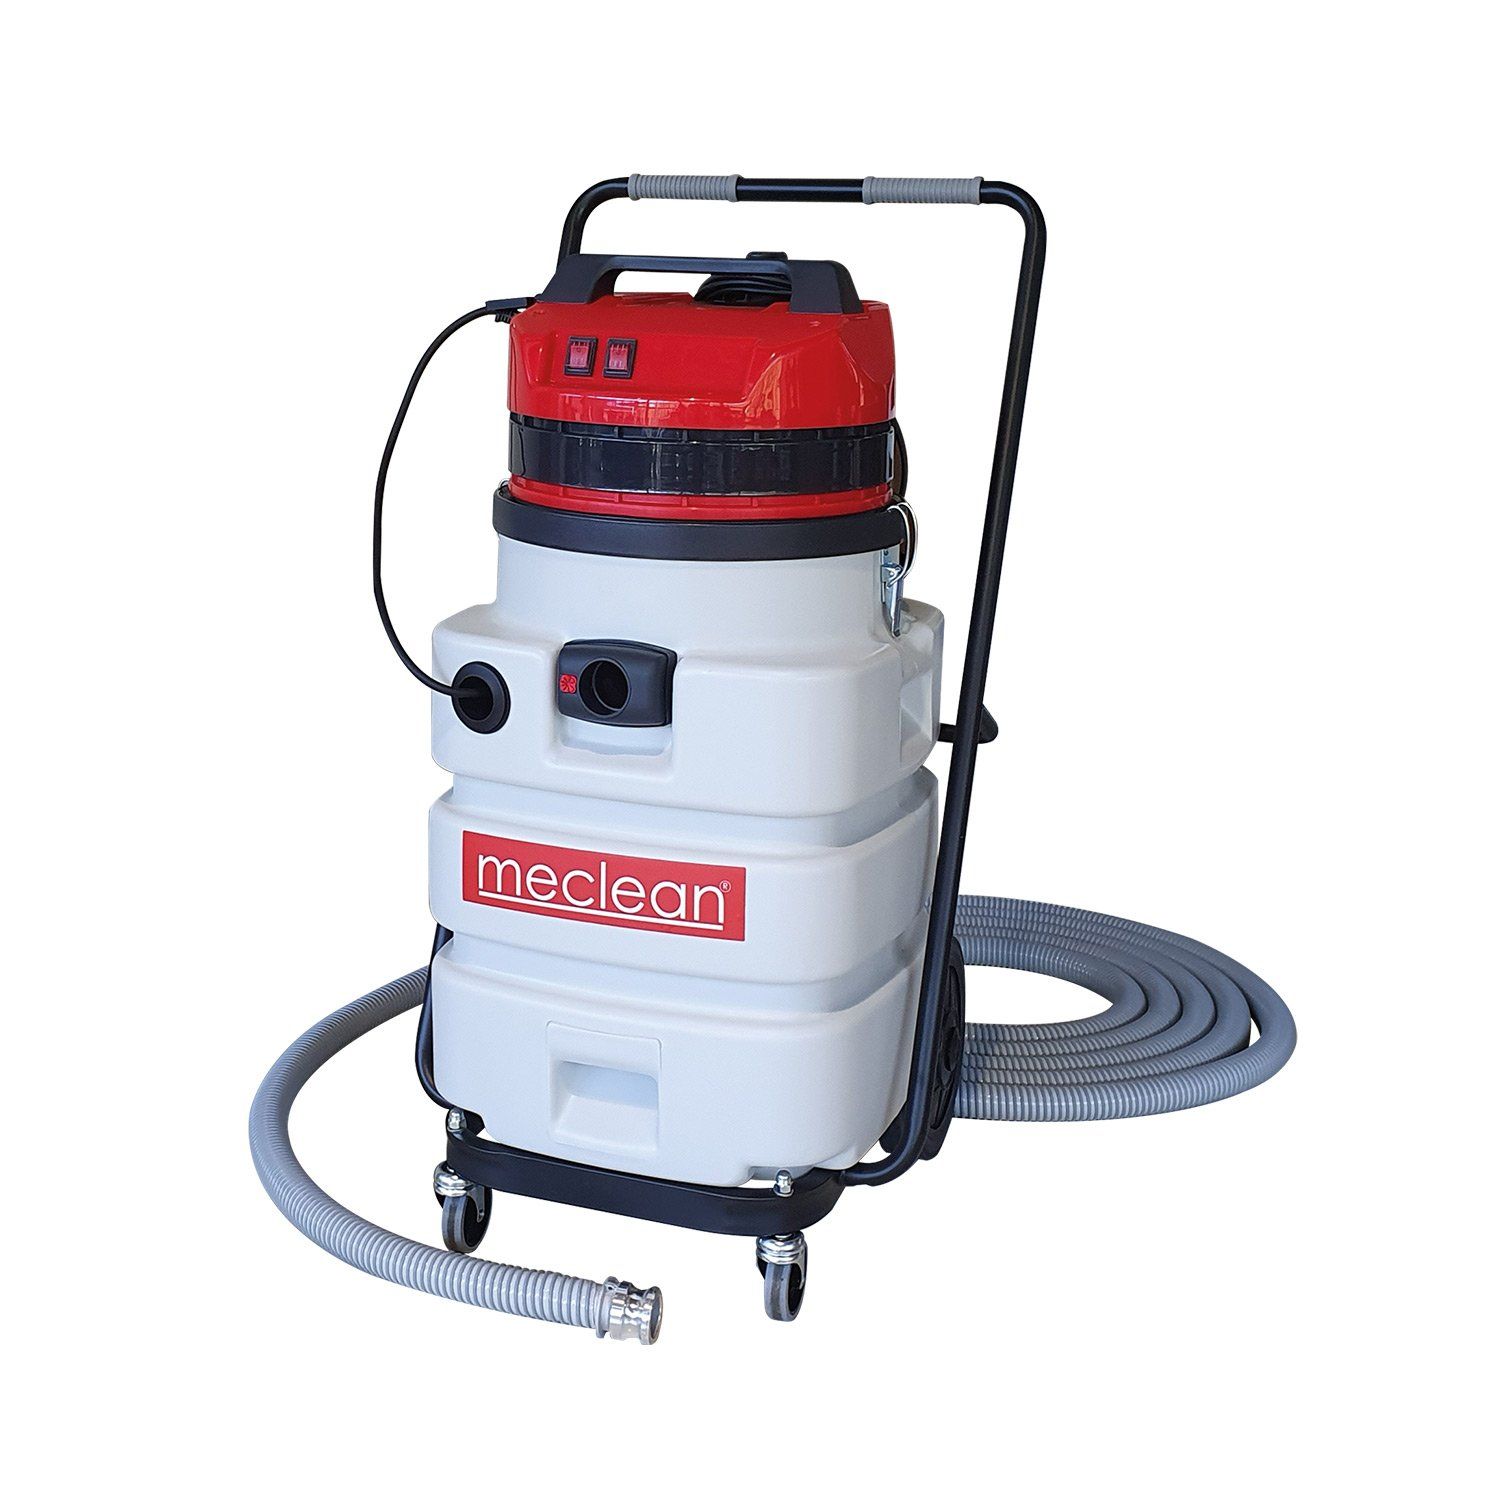 Meclean professional wet dry dust vacuum cleaner Aquavac Pump